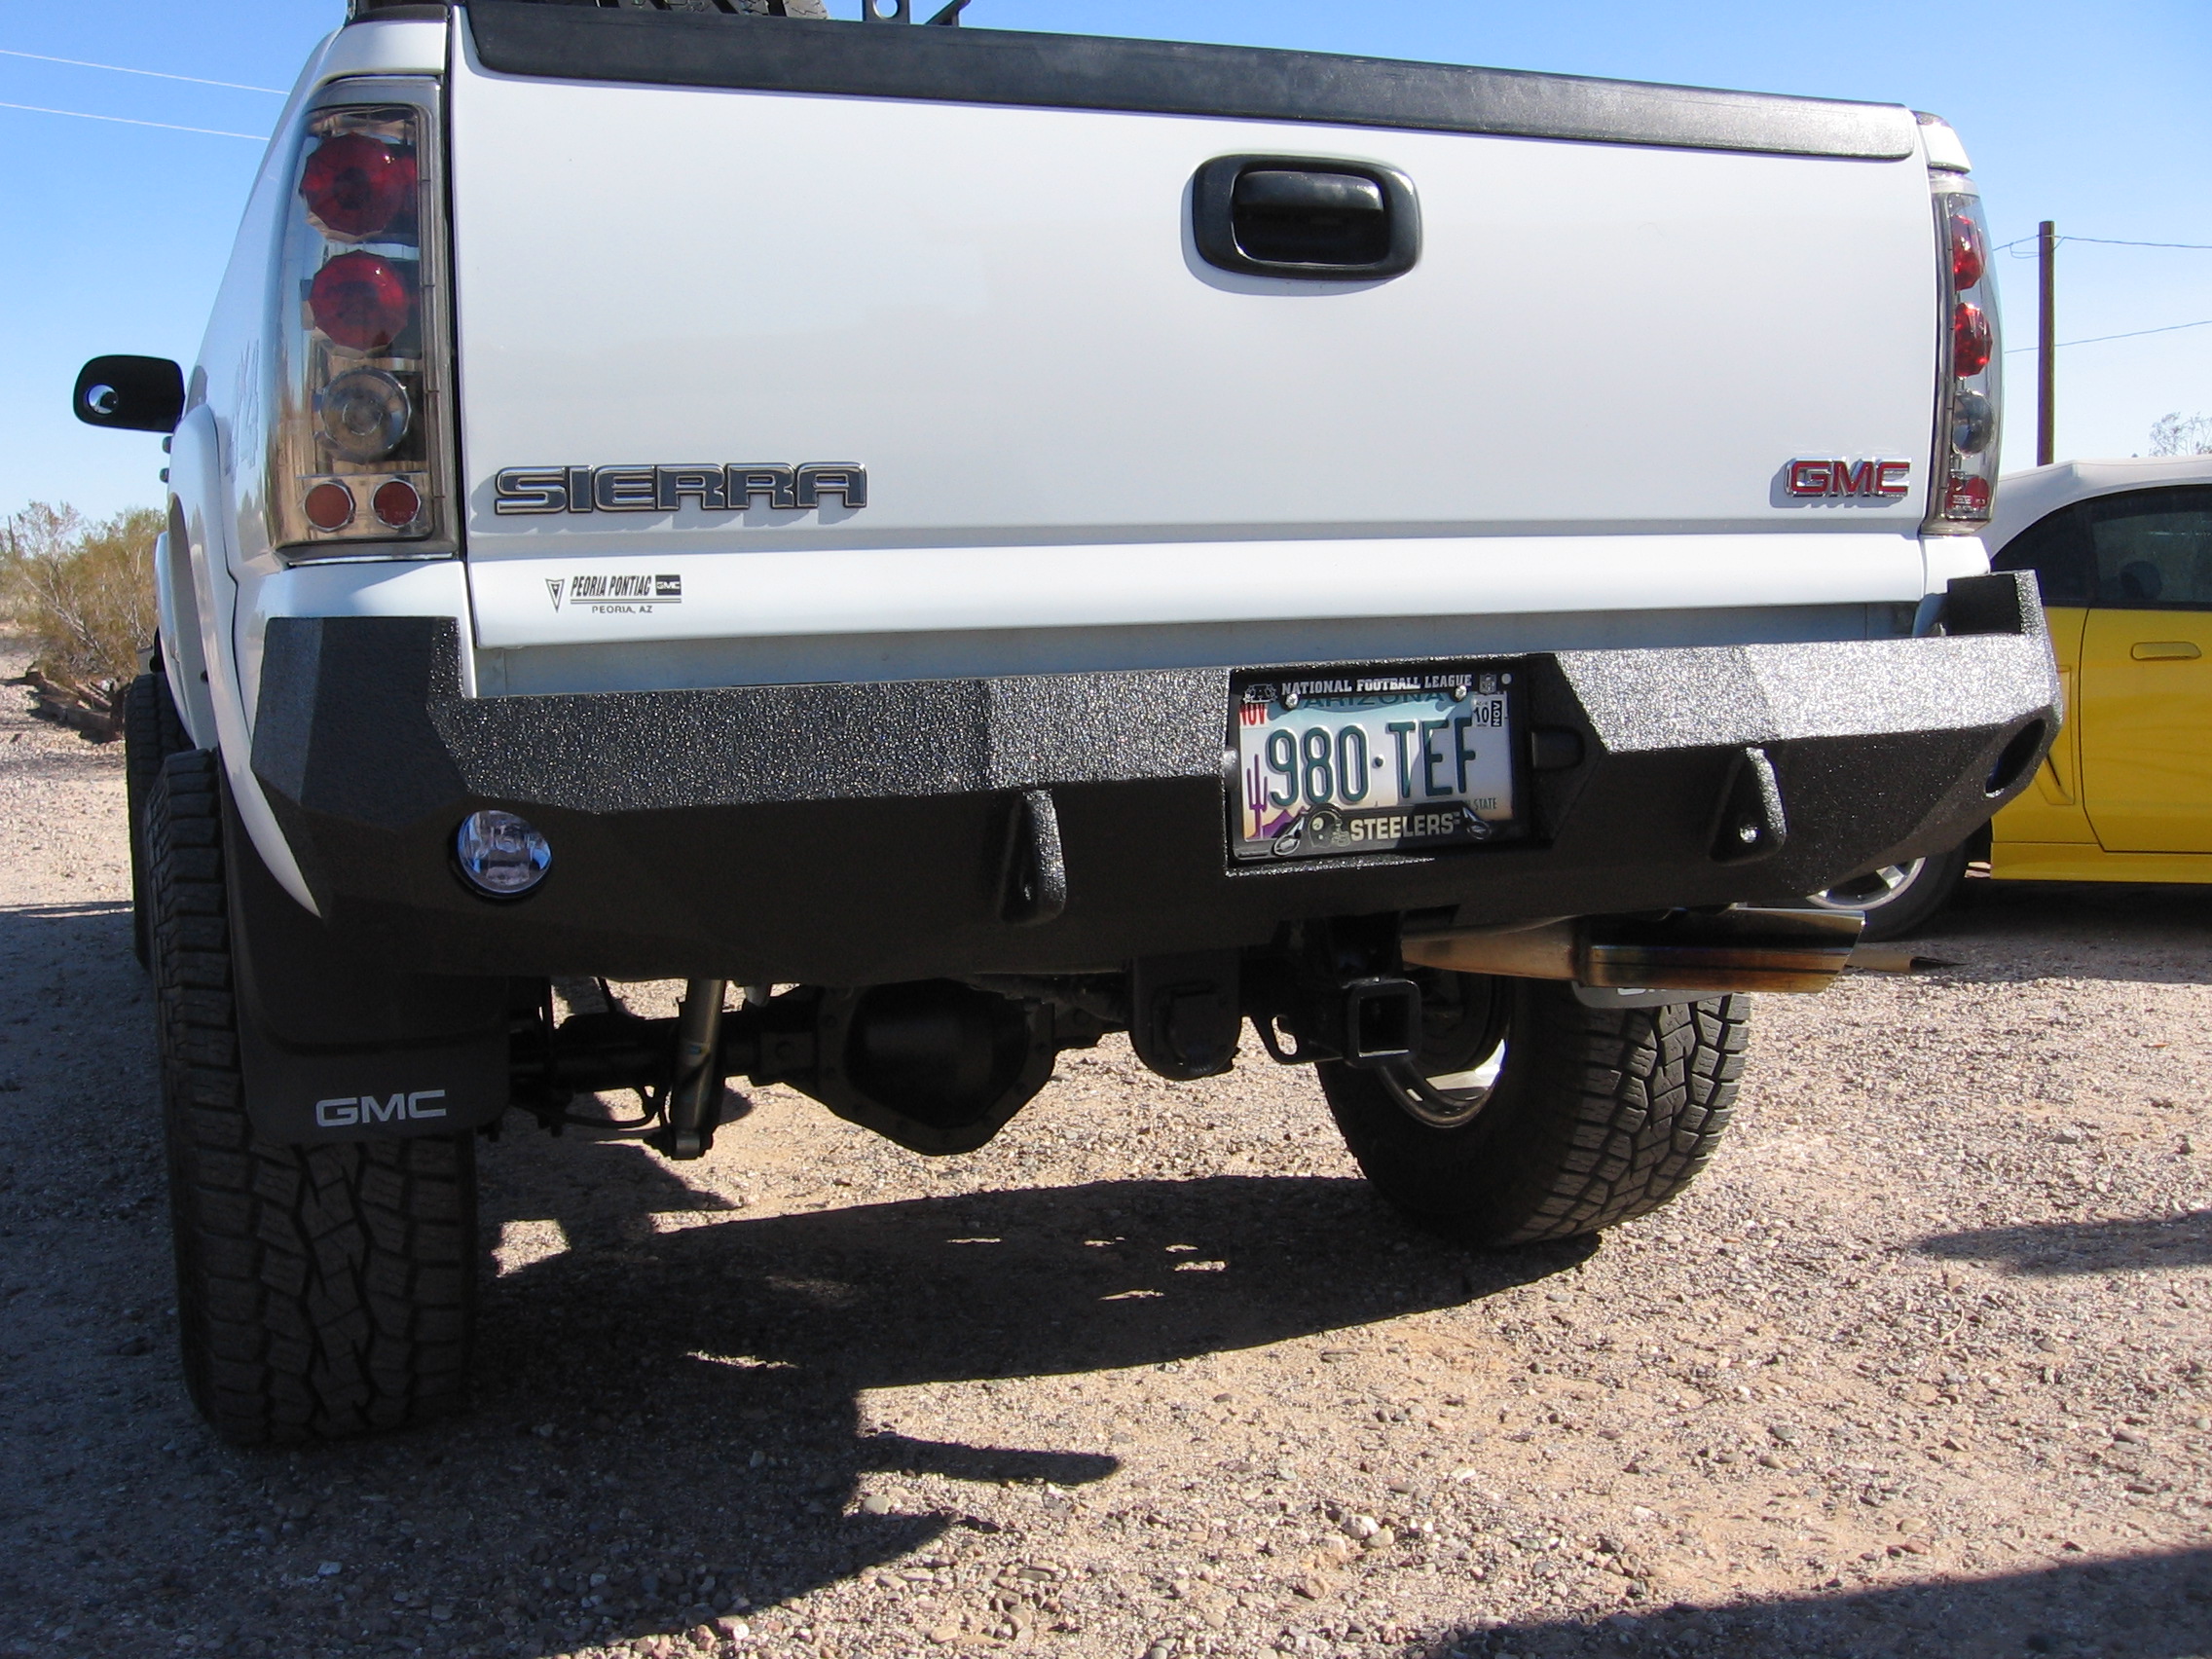 03-07 Chevrolet 1500 rear base bumper